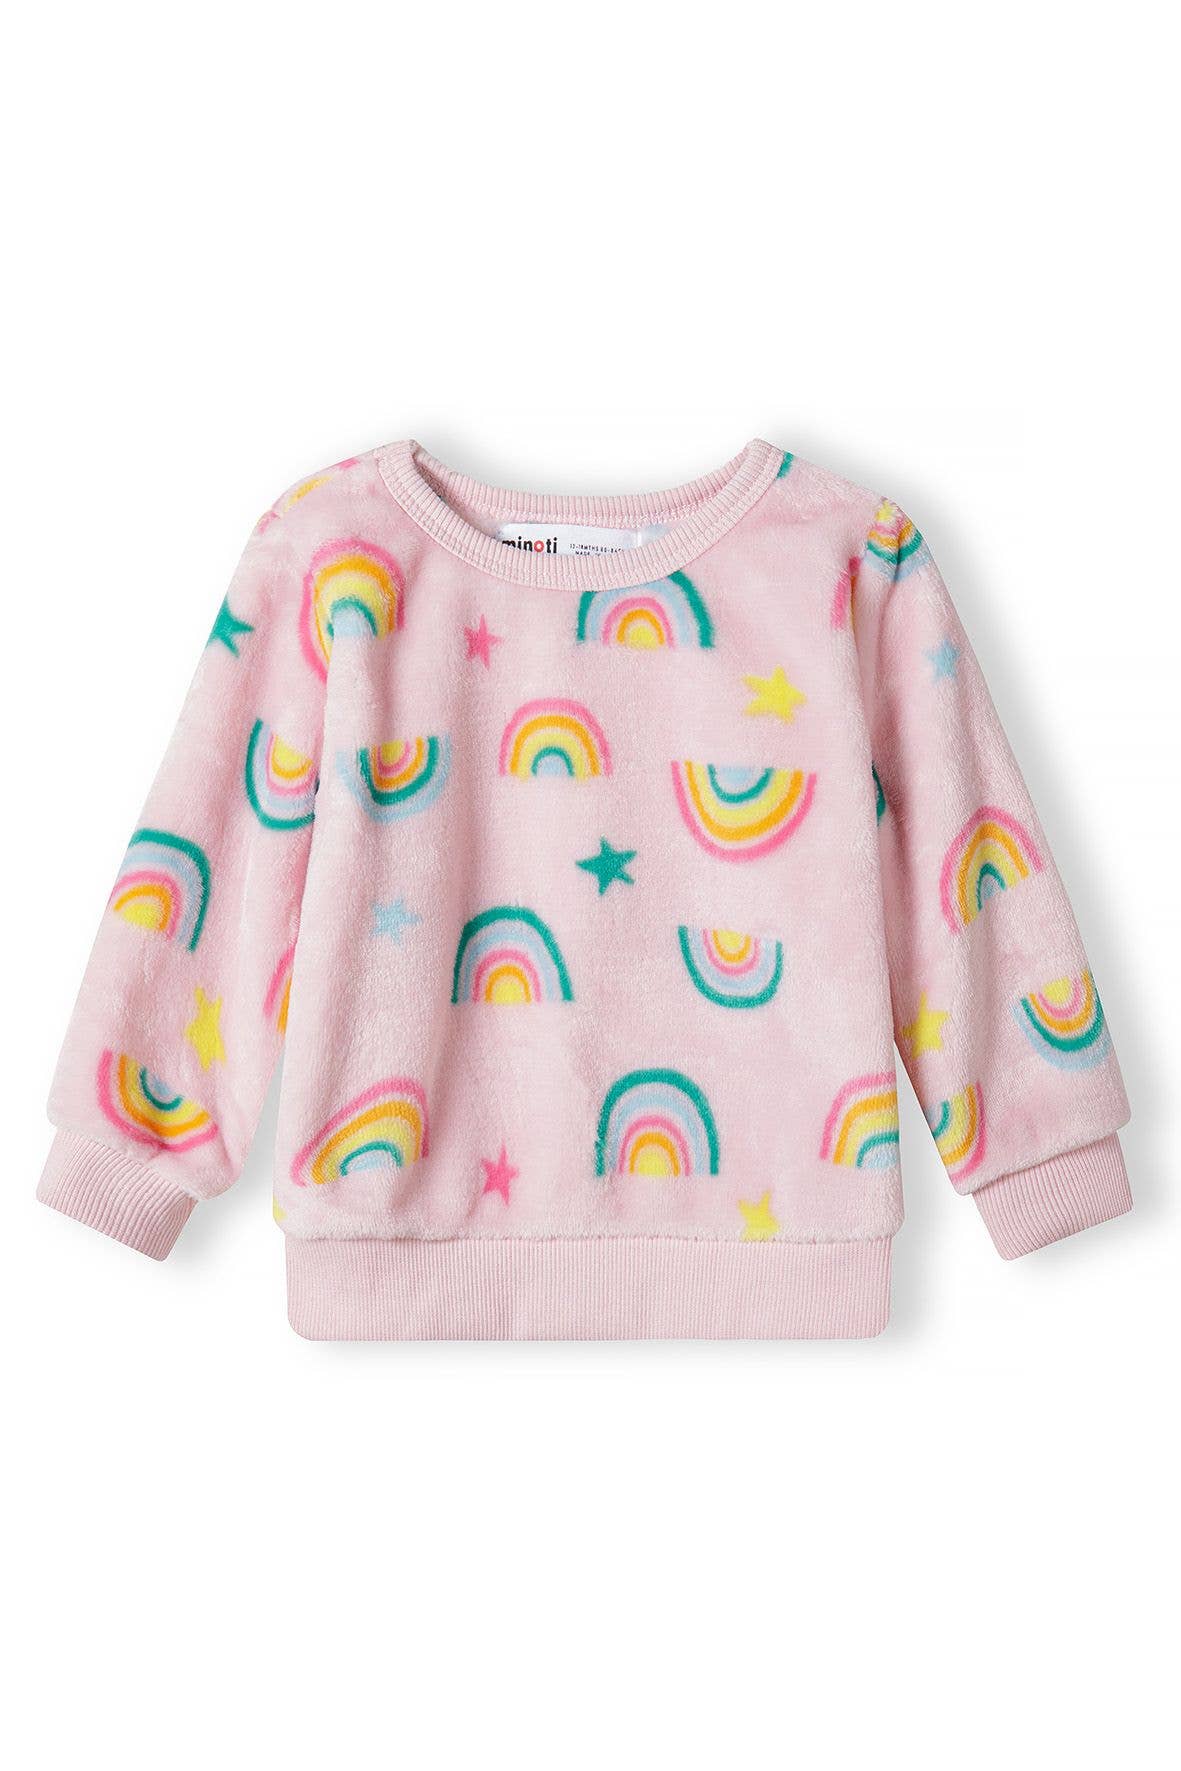 Cosy Cuddle Fleece Pyjama | Over The Rainbow